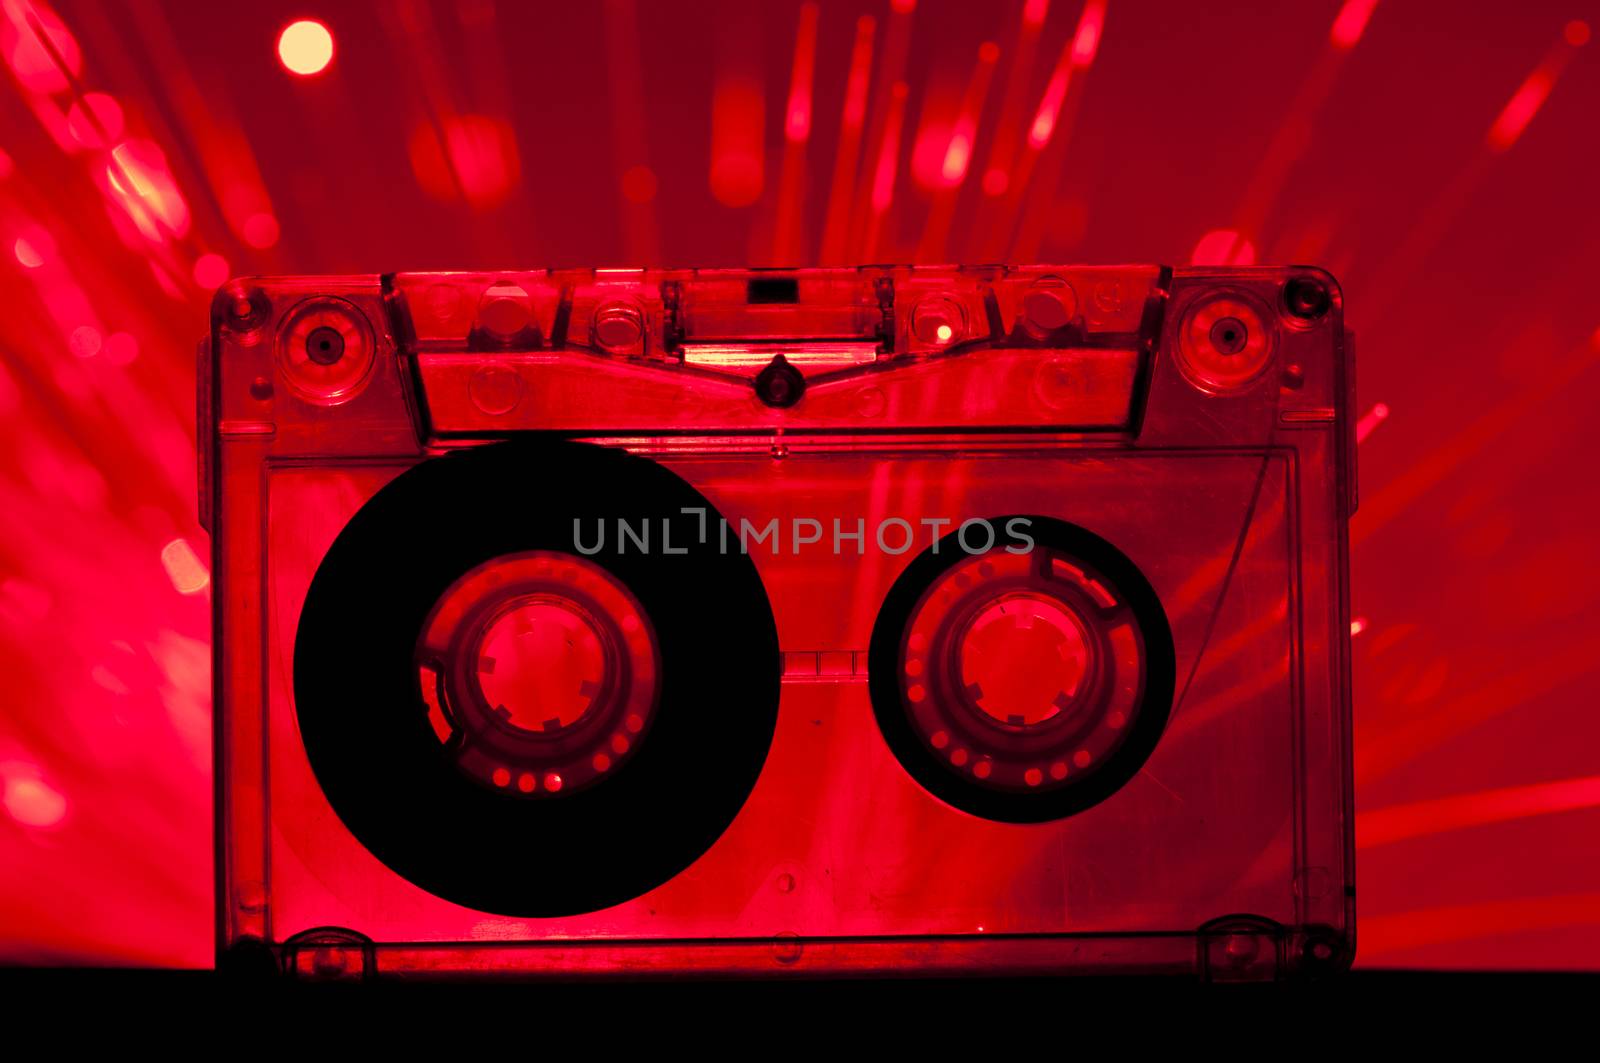 Transparent Cassette tape disco lights background by deyan_georgiev